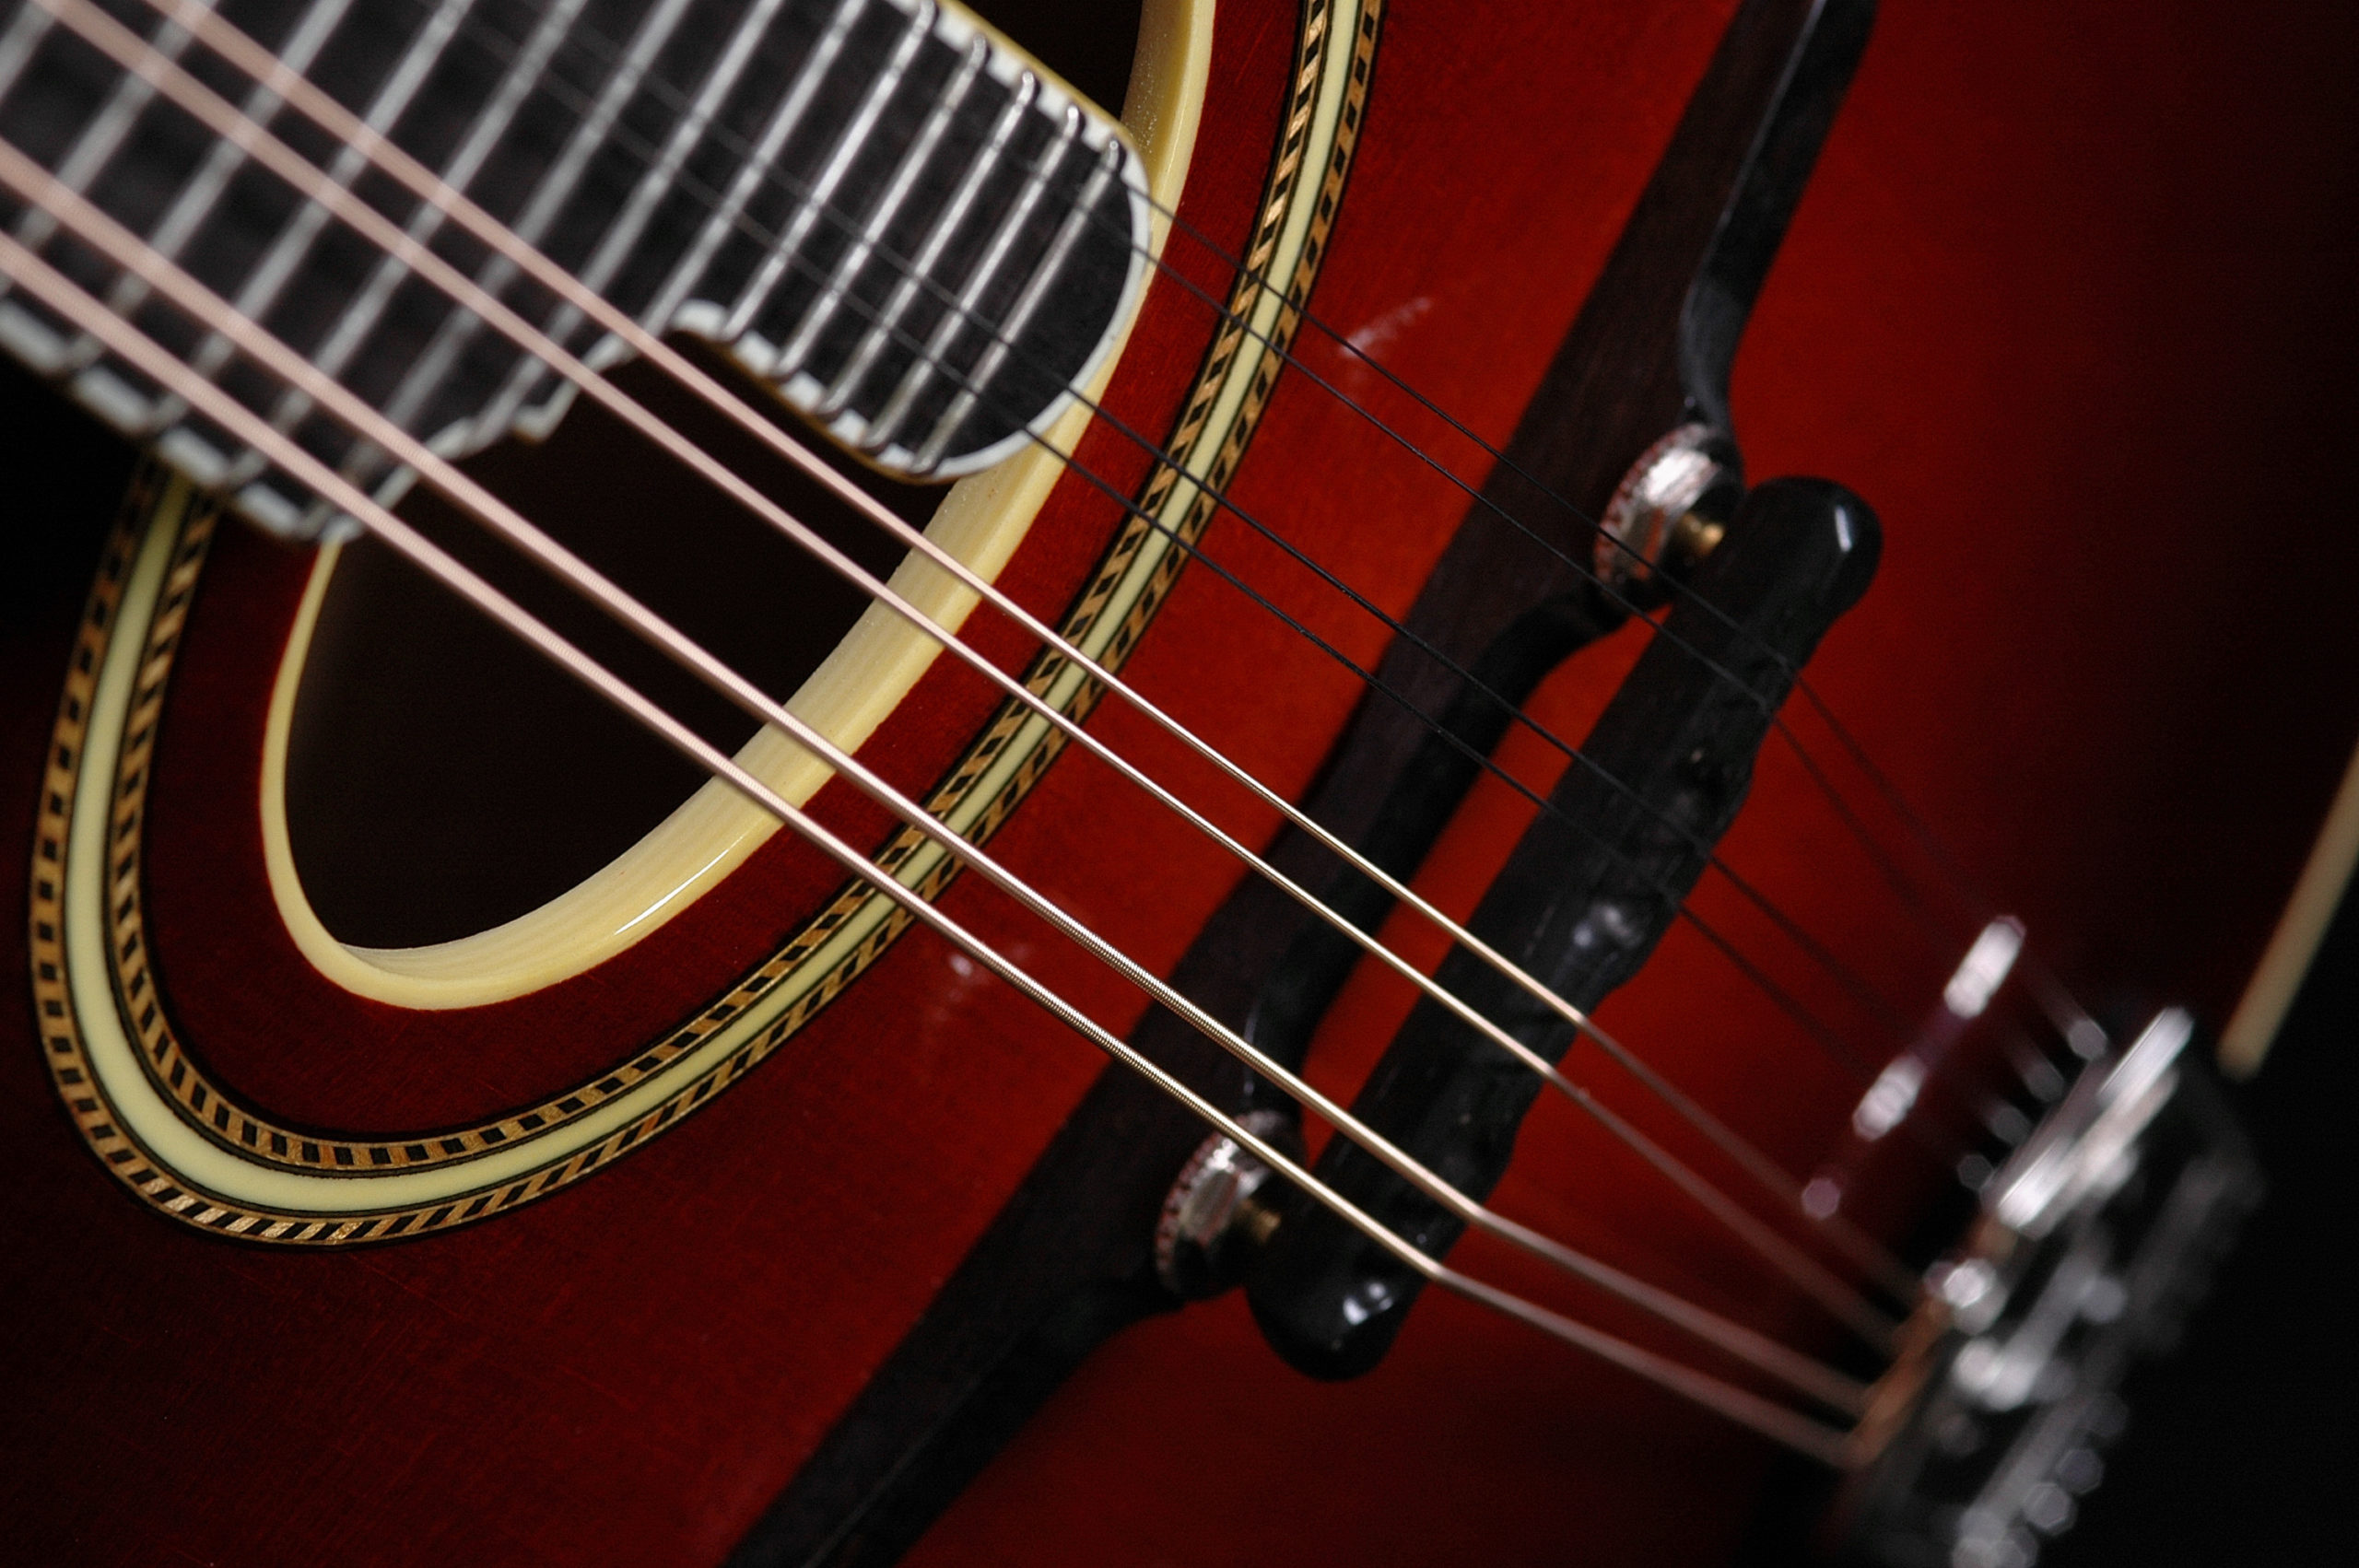 Swhmc 4.53-Inches Adjustable Compensated Mandolin Strings Bridge Ebony for Archtop Mandolins 